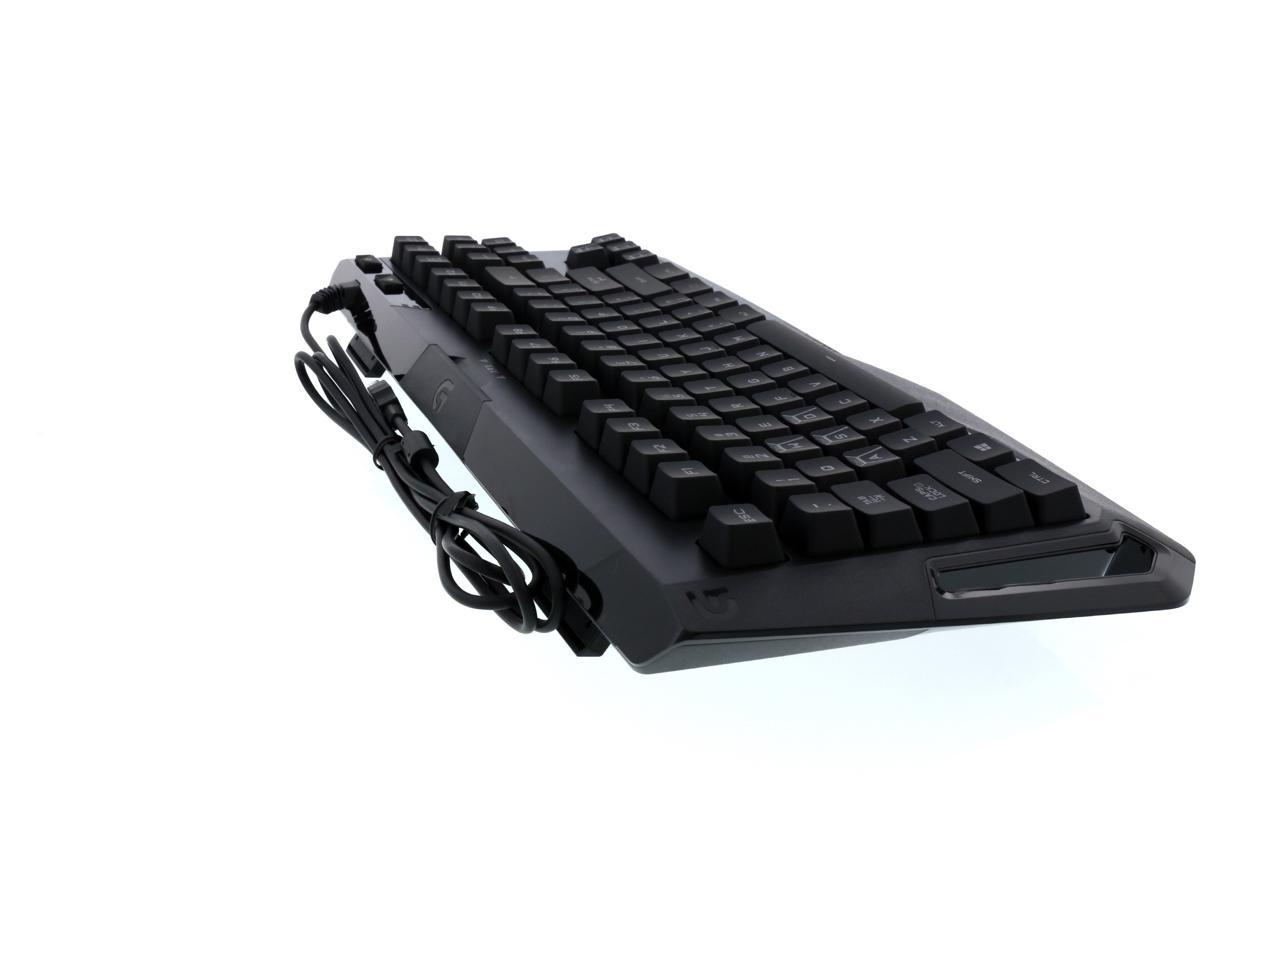 Logitech G410 Atlas Spectrum RGB Tenkeyless Gaming Keyboard - Newegg.com